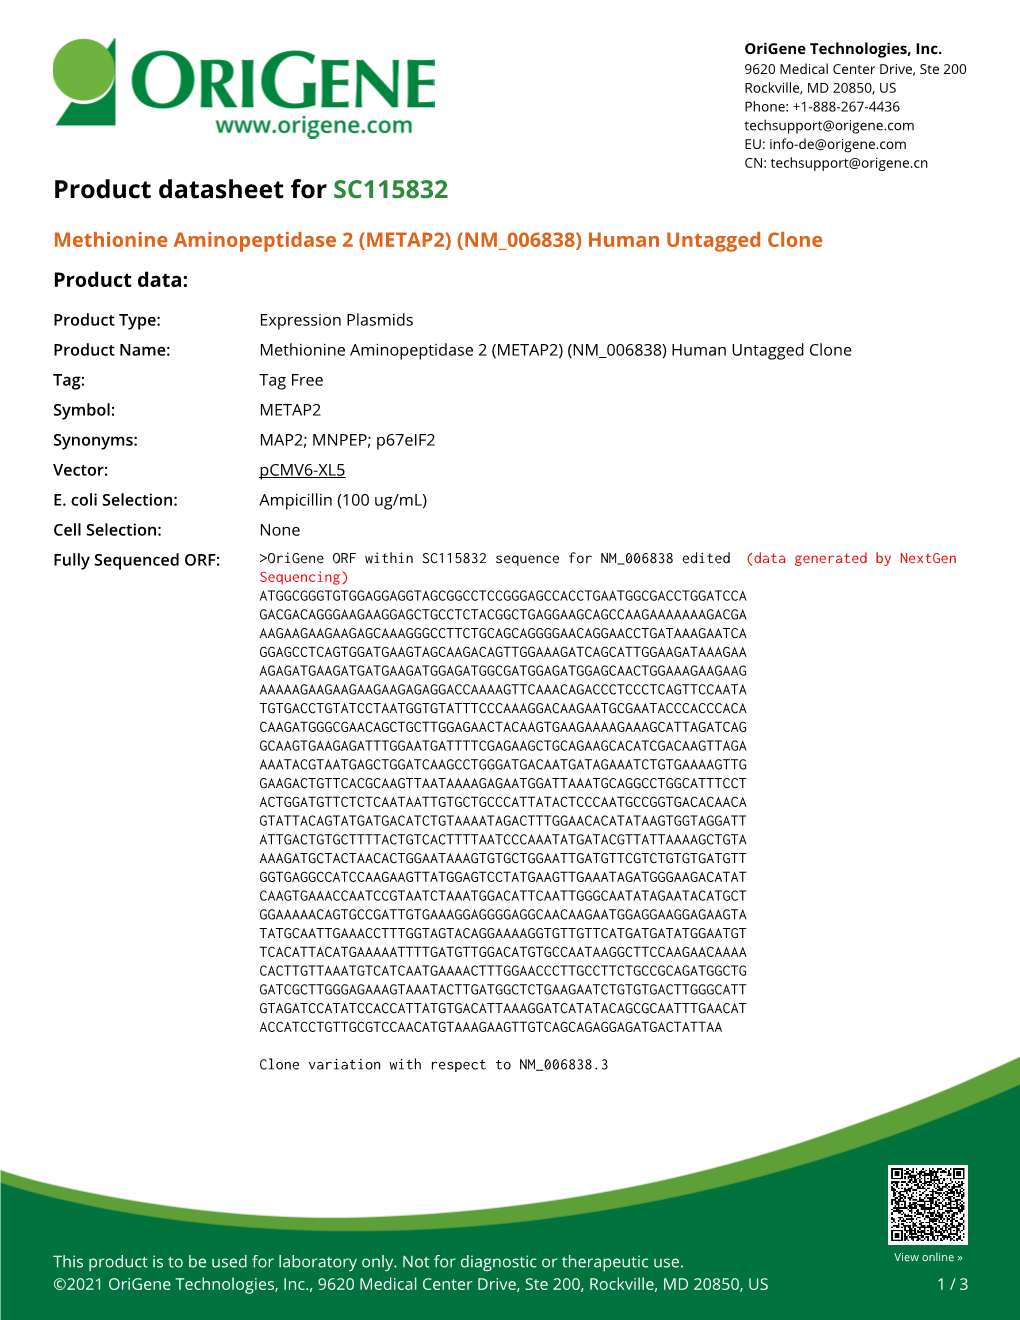 Methionine Aminopeptidase 2 (METAP2) (NM 006838) Human Untagged Clone Product Data